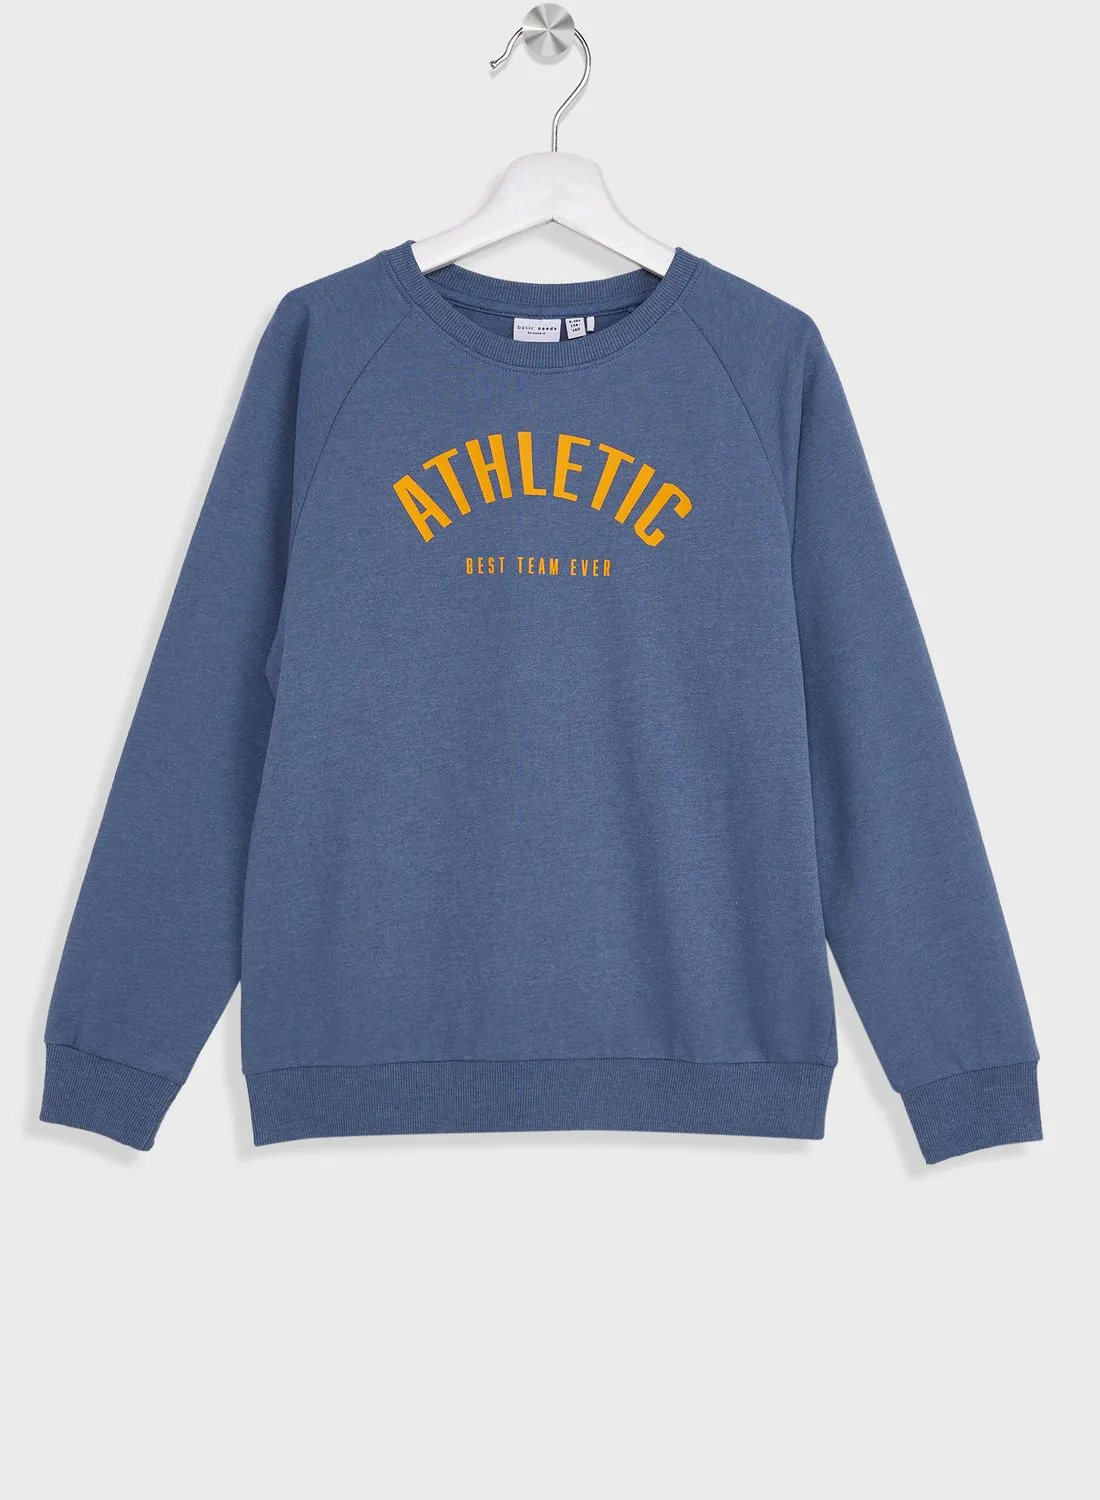 NAME IT Kids Athletic Slogan Sweatshirt